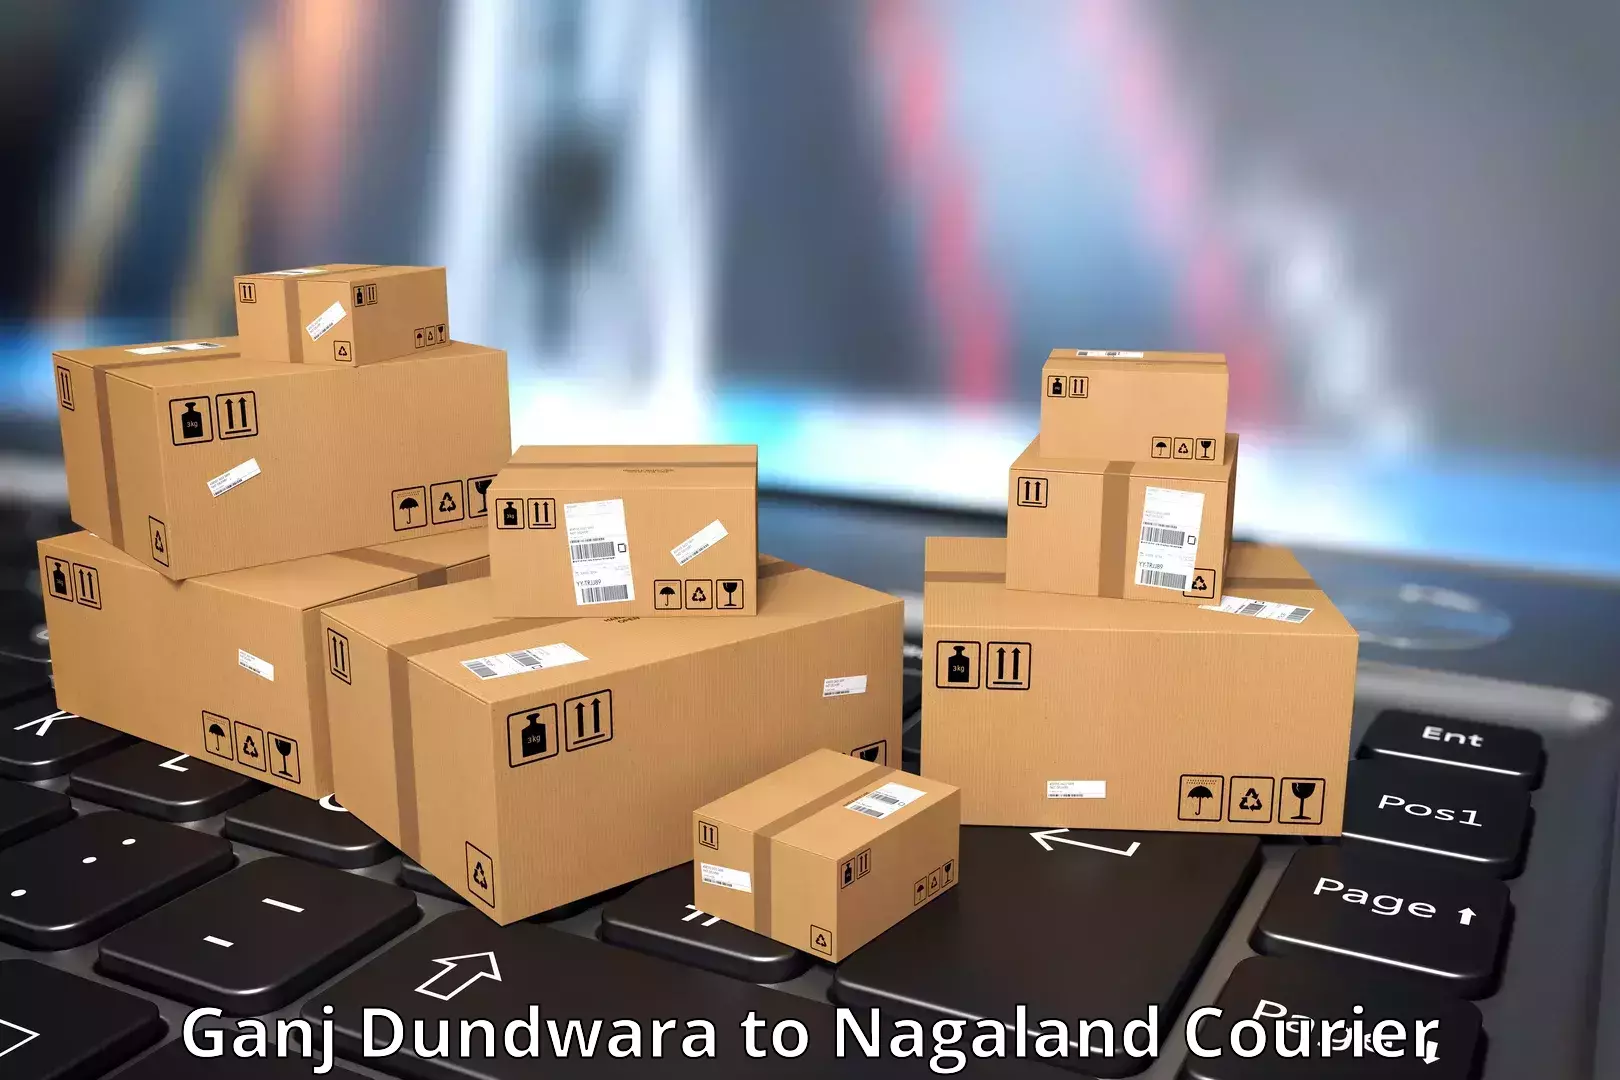 International courier networks Ganj Dundwara to Nagaland